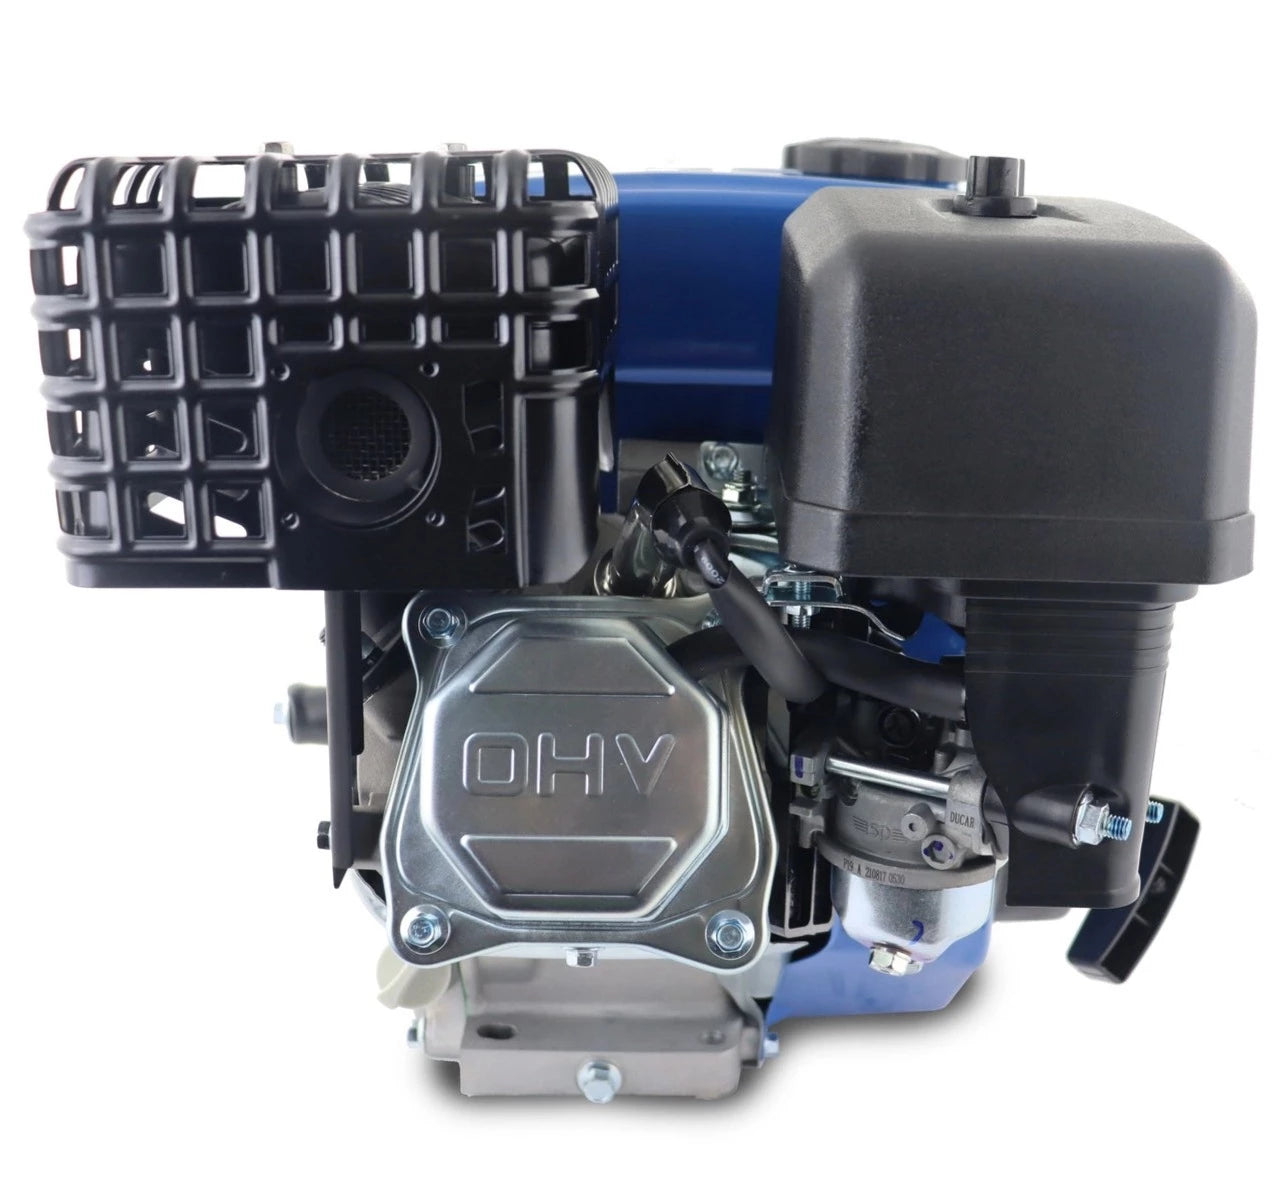 Hyundai IC210X-20 212cc 7hp 20mm Horizontal Straight Shaft Petrol Engine 4-Stroke OHV